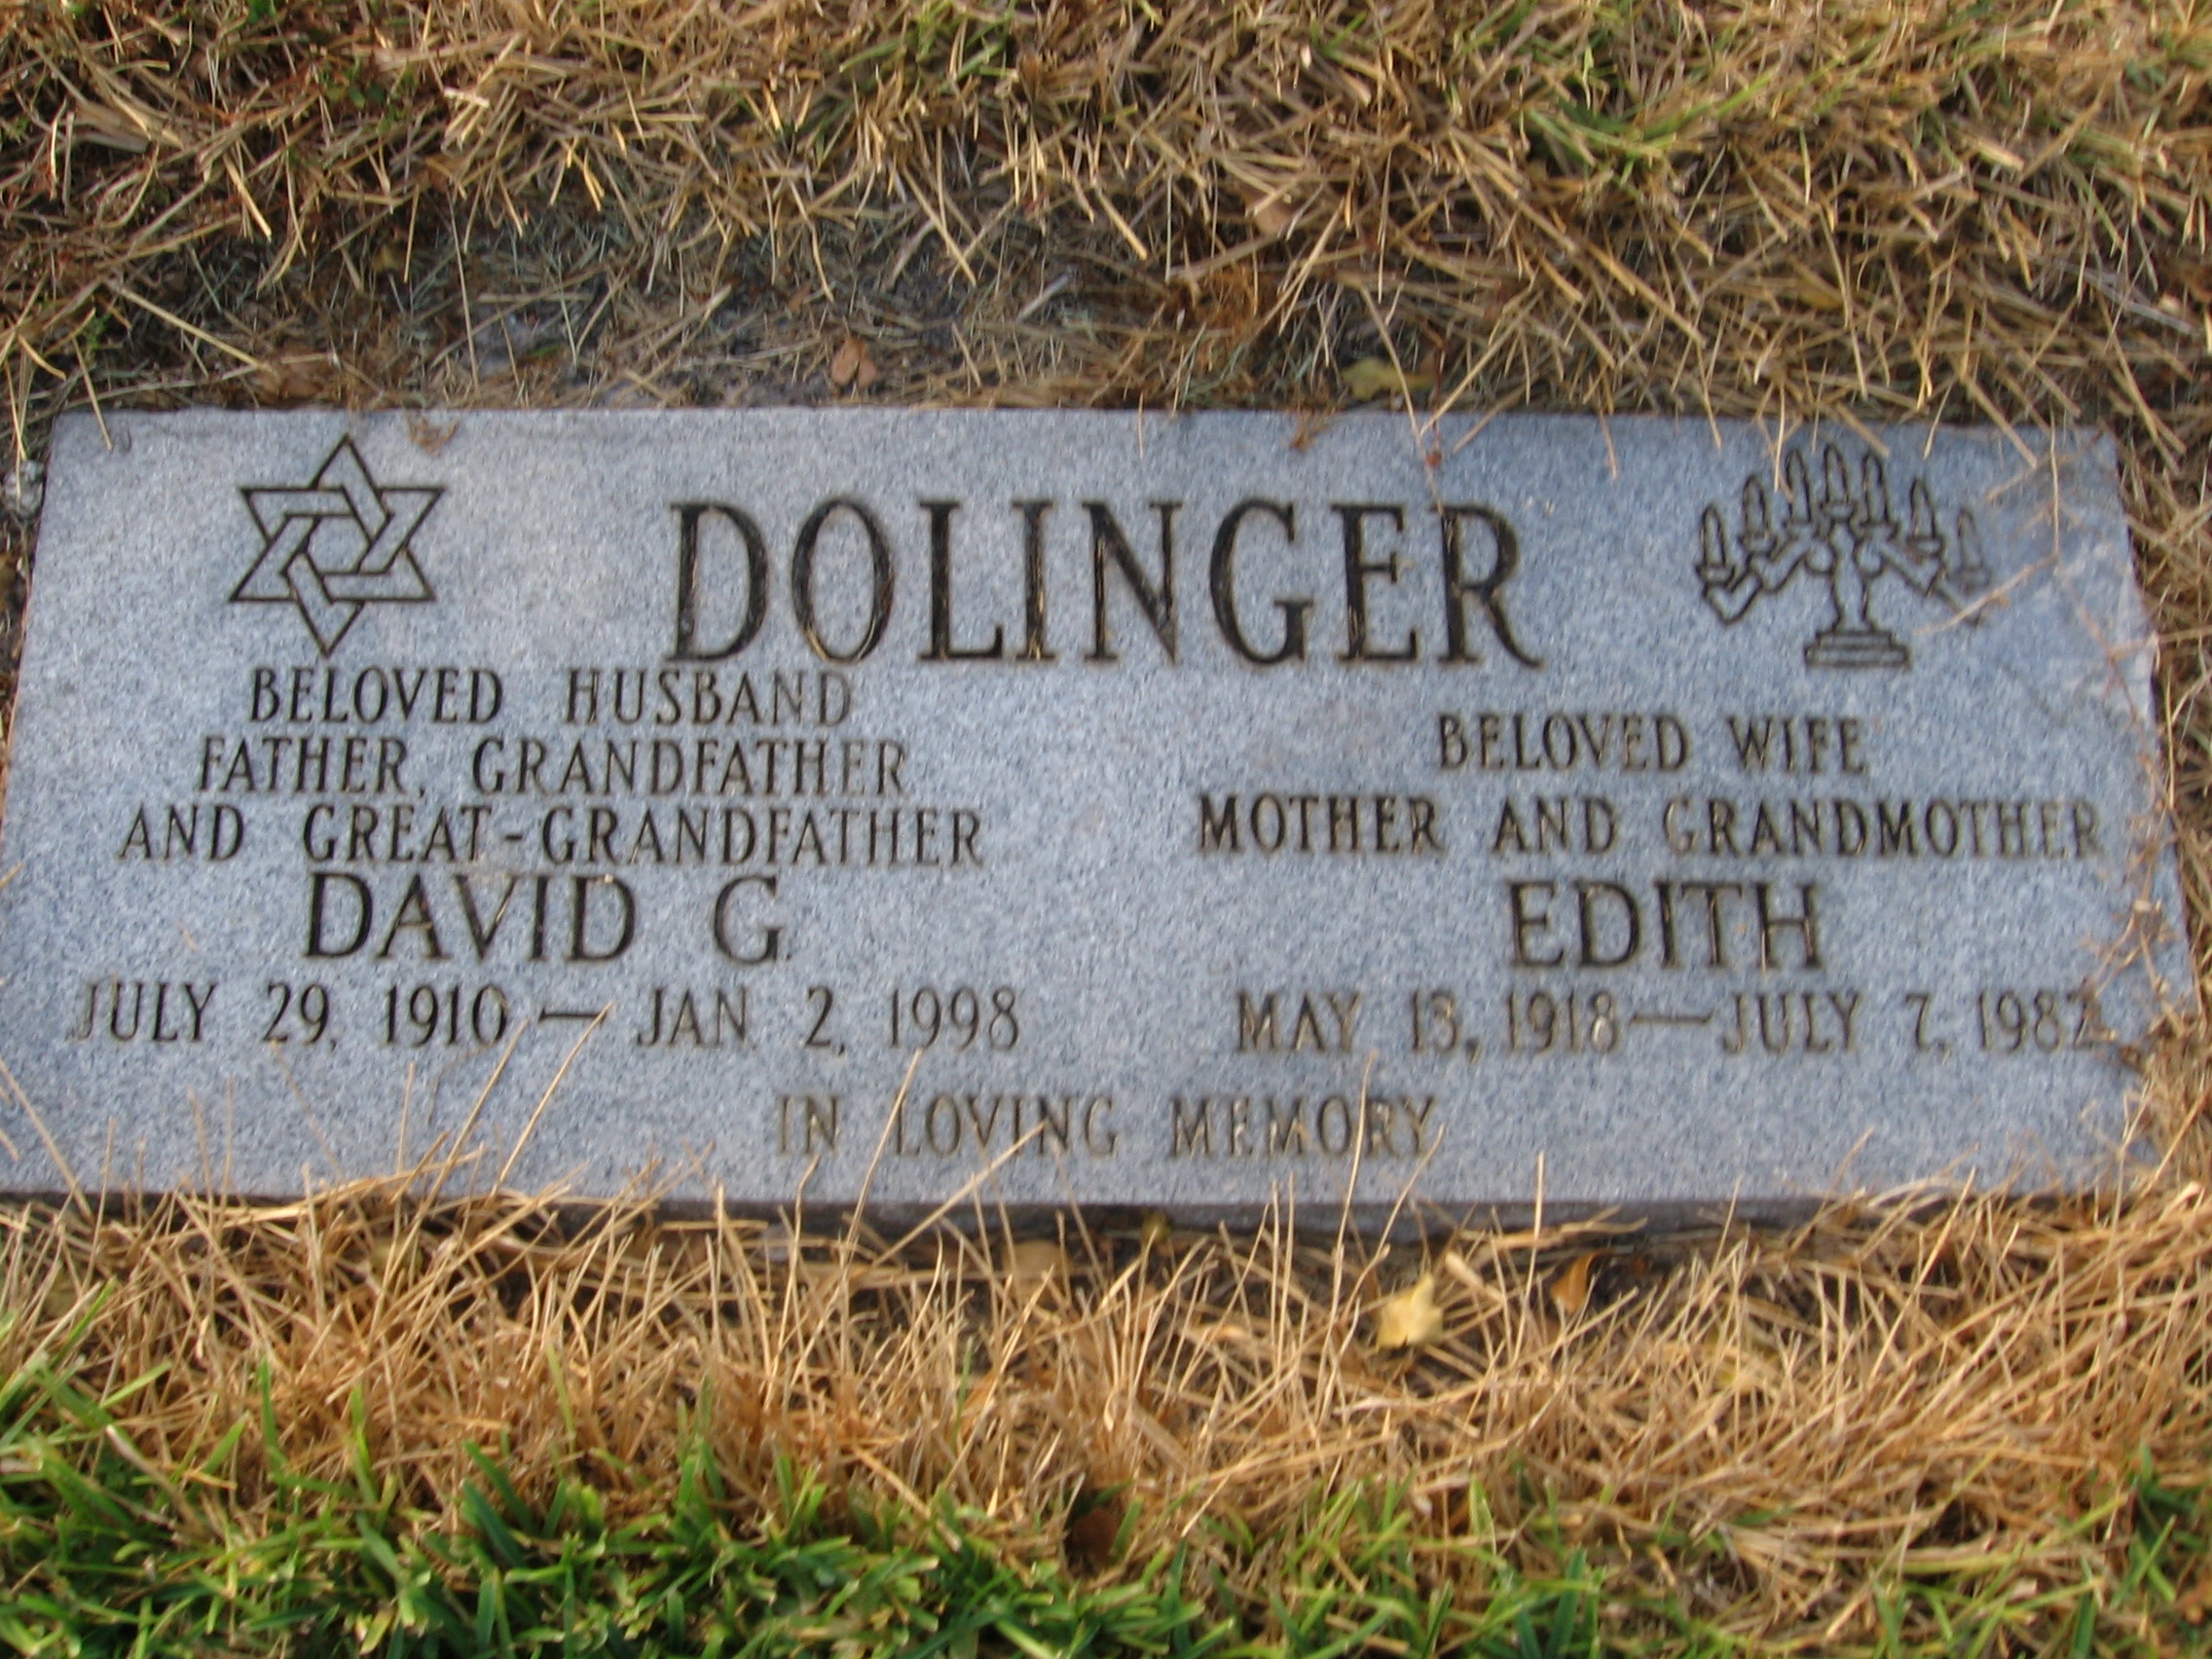 Edith Dolinger